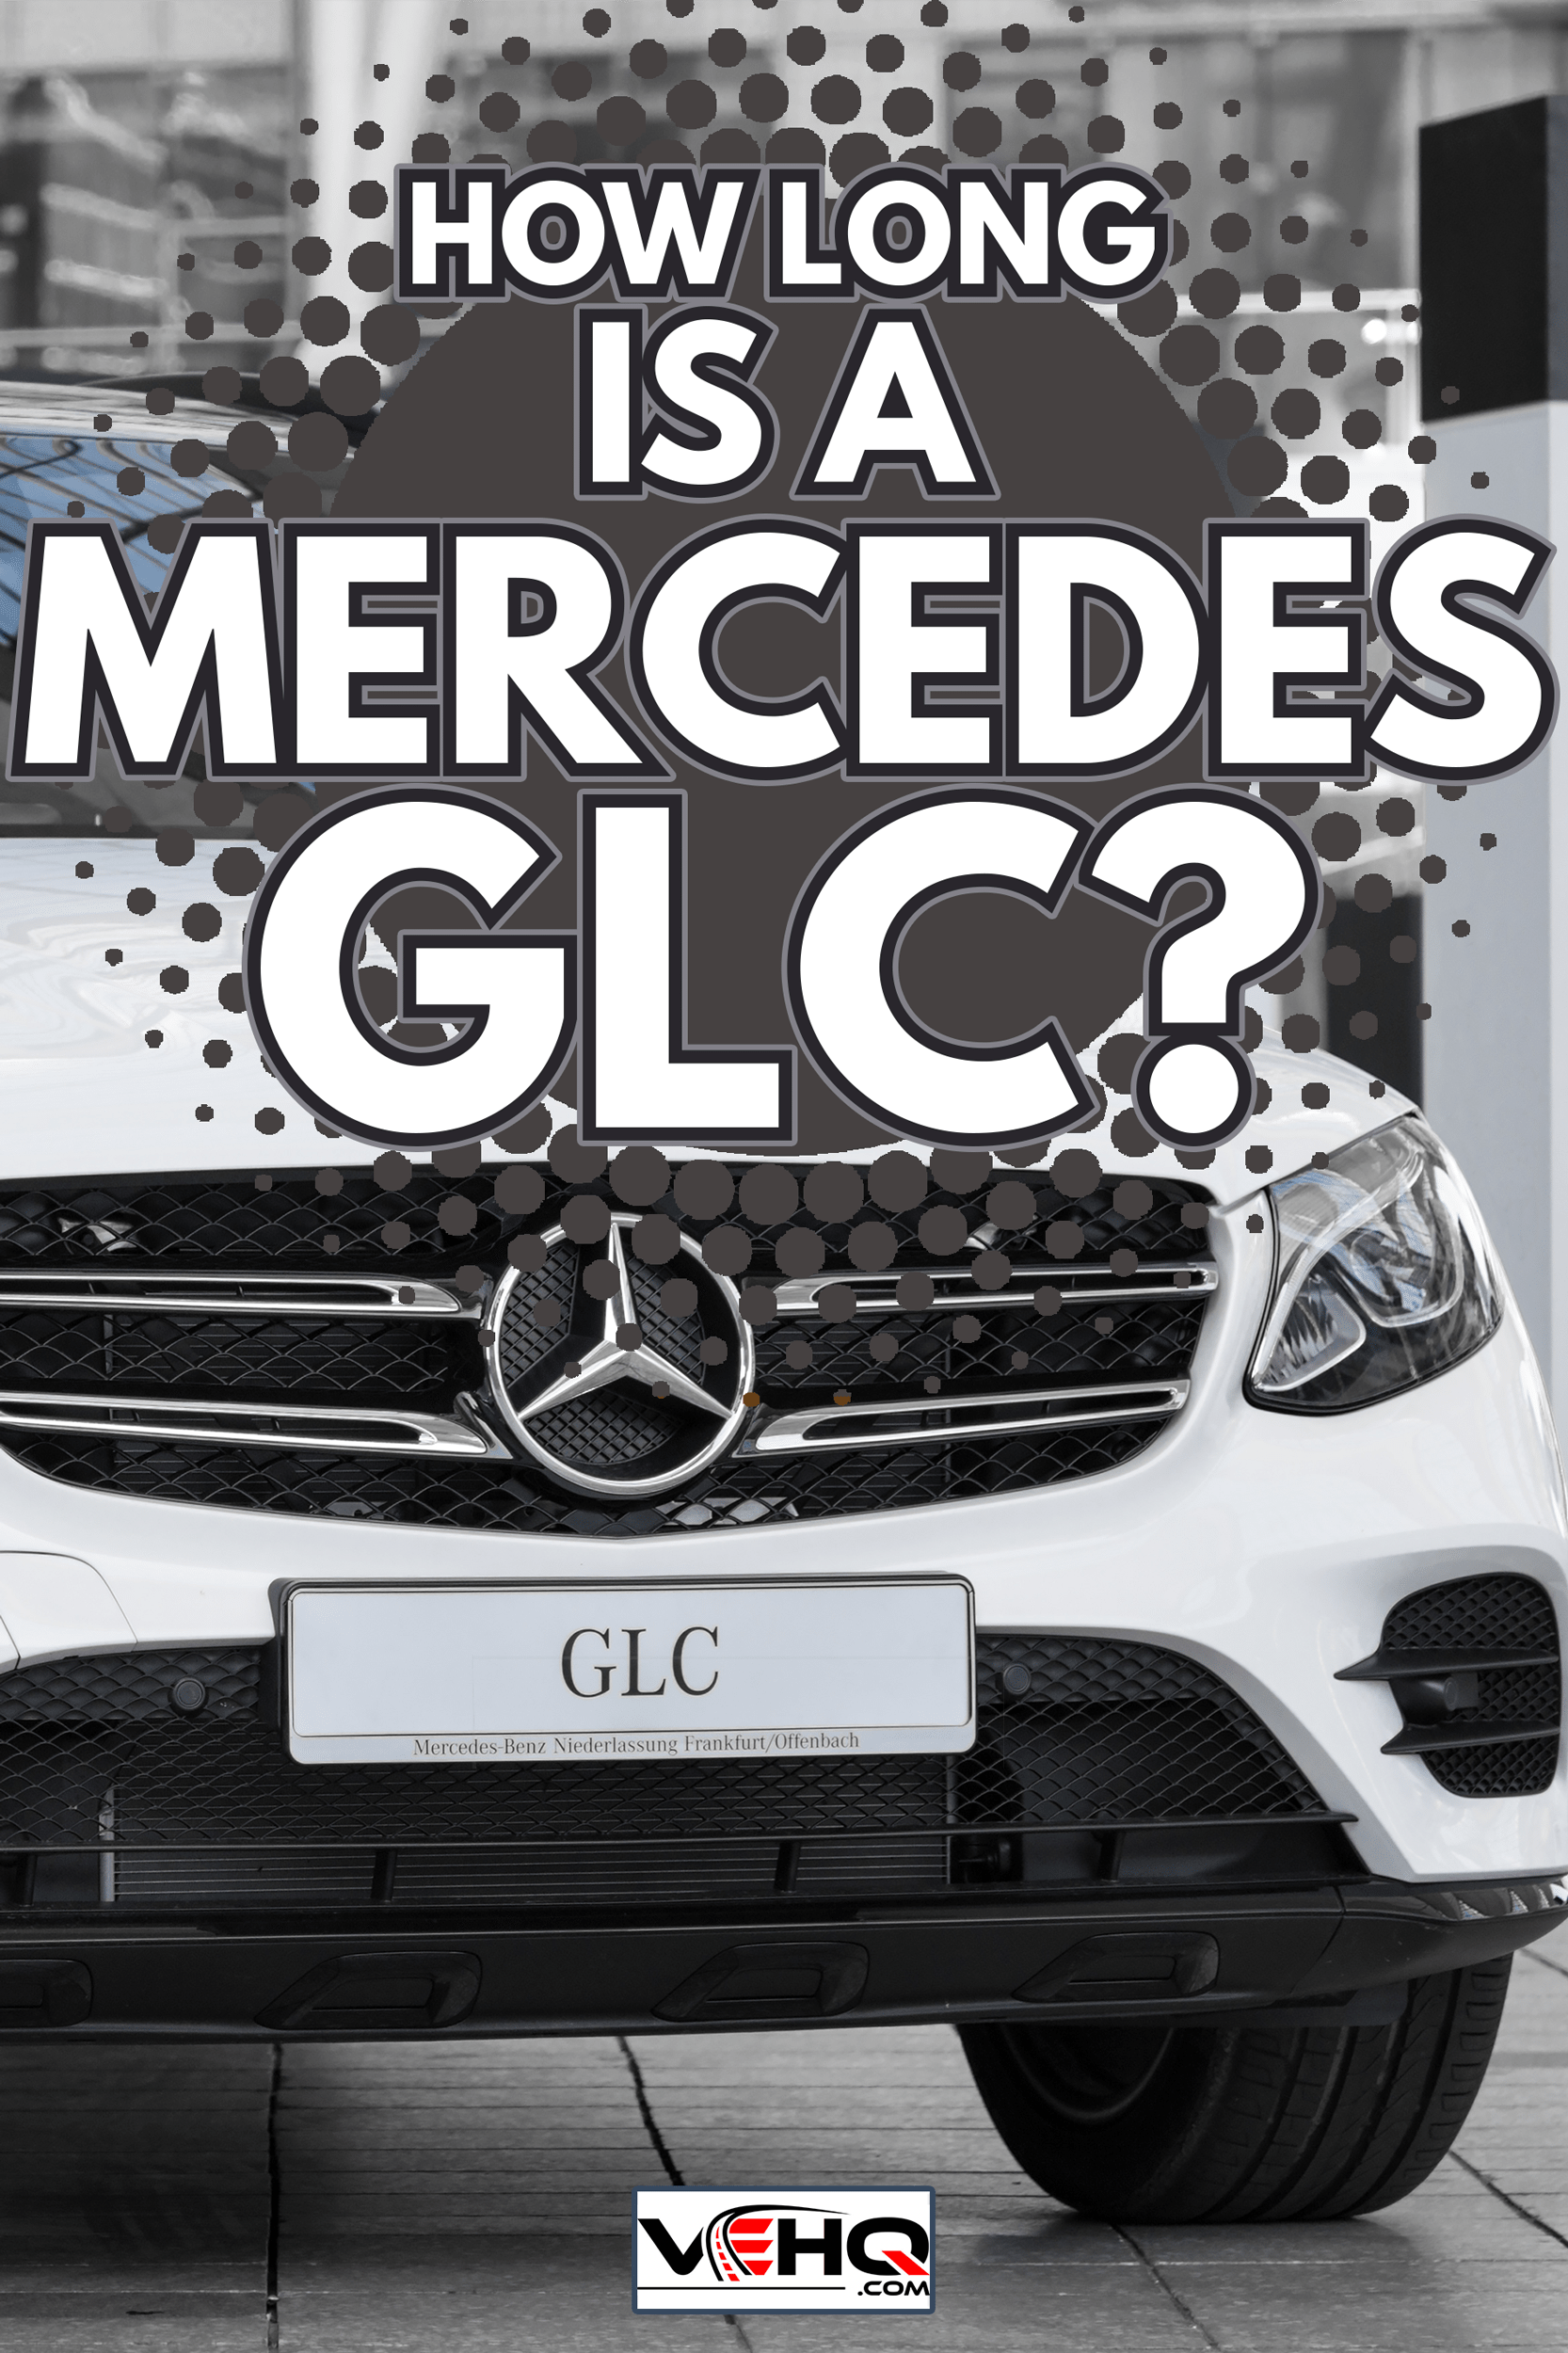 Modern model of prestigious Mercedes-Benz GLC-class SUV crossover - How Long Is A Mercedes GLC